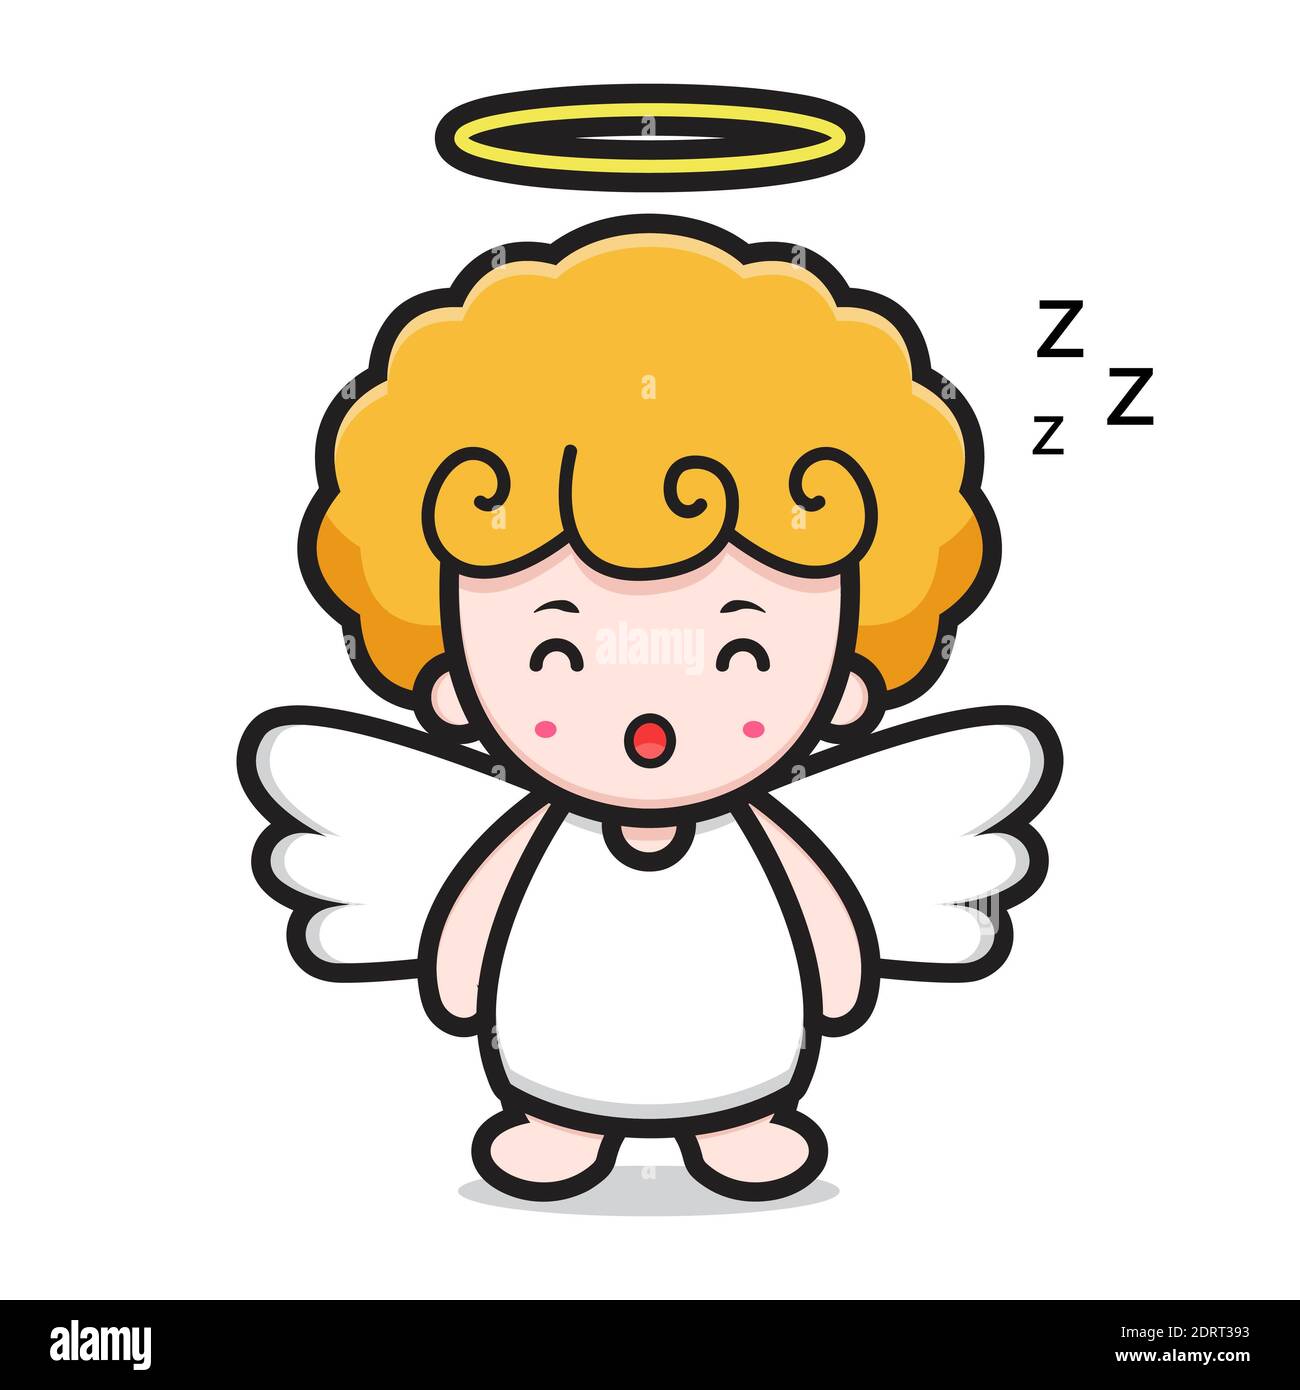 cute angel cartoon character sleeping Stock Photo - Alamy